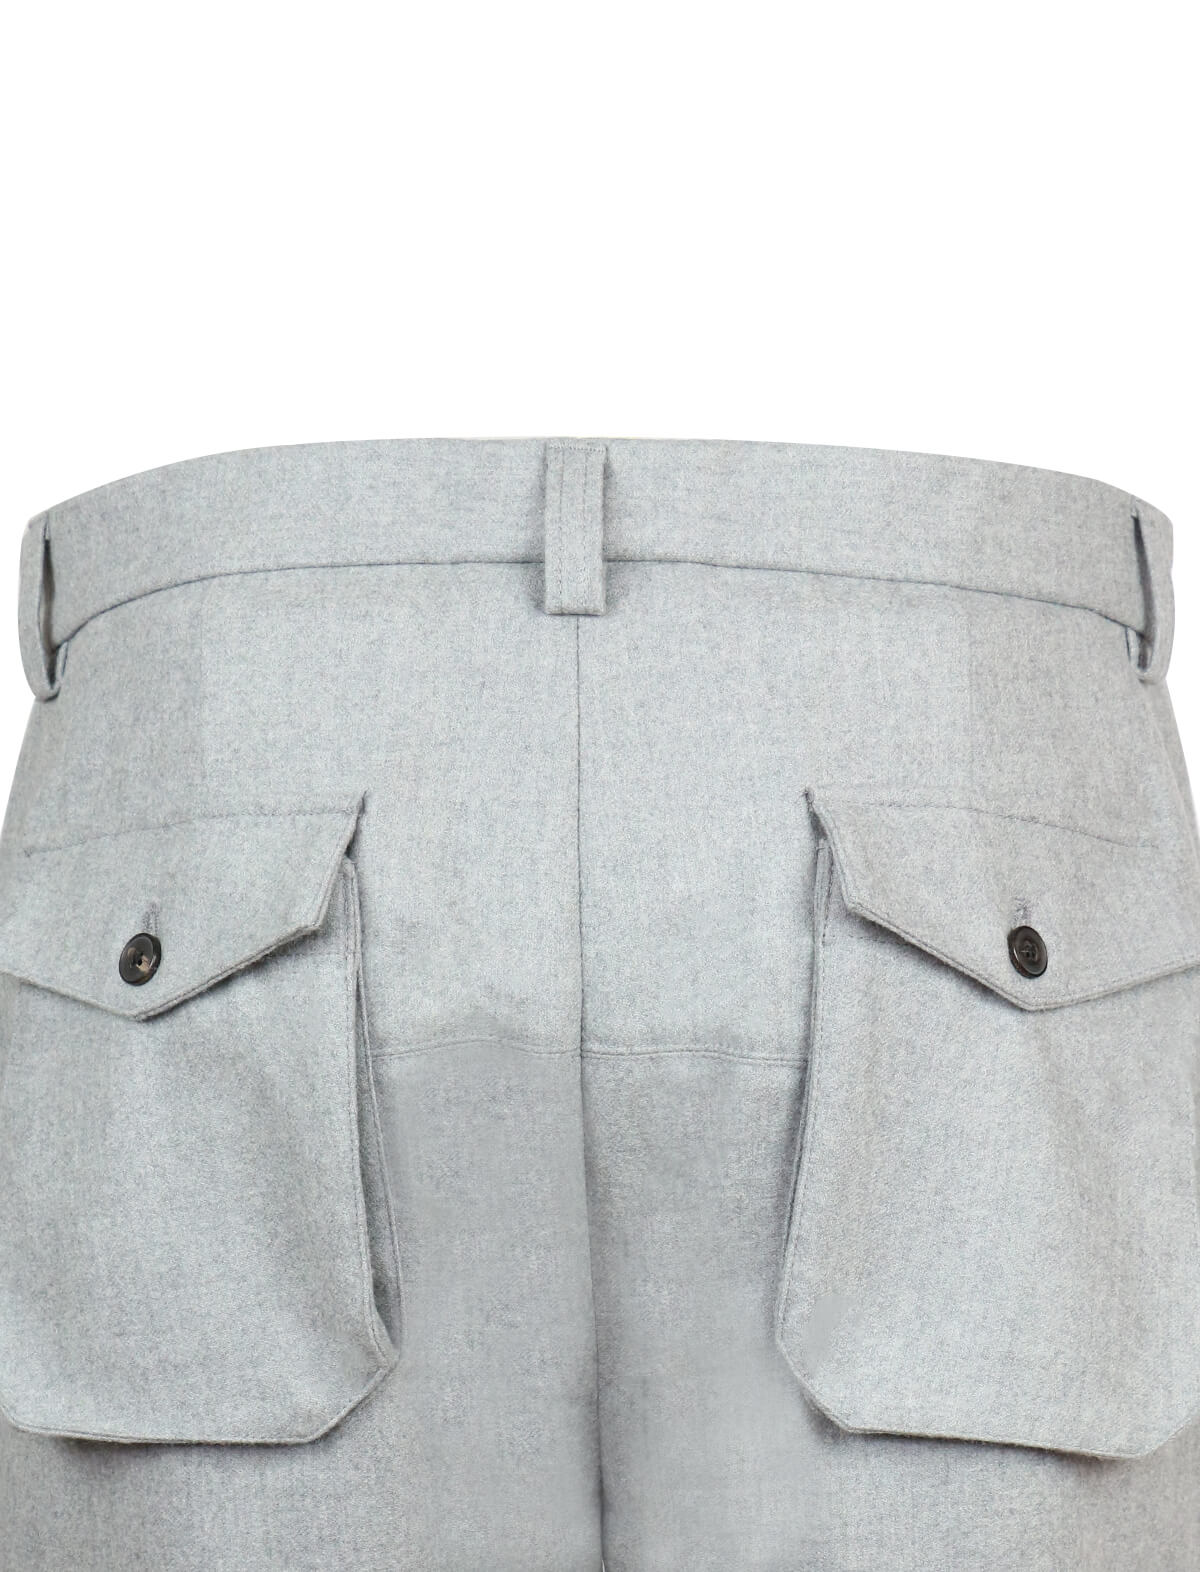 GABRIELE PASINI Box Pleat Wool Pants in Light Grey